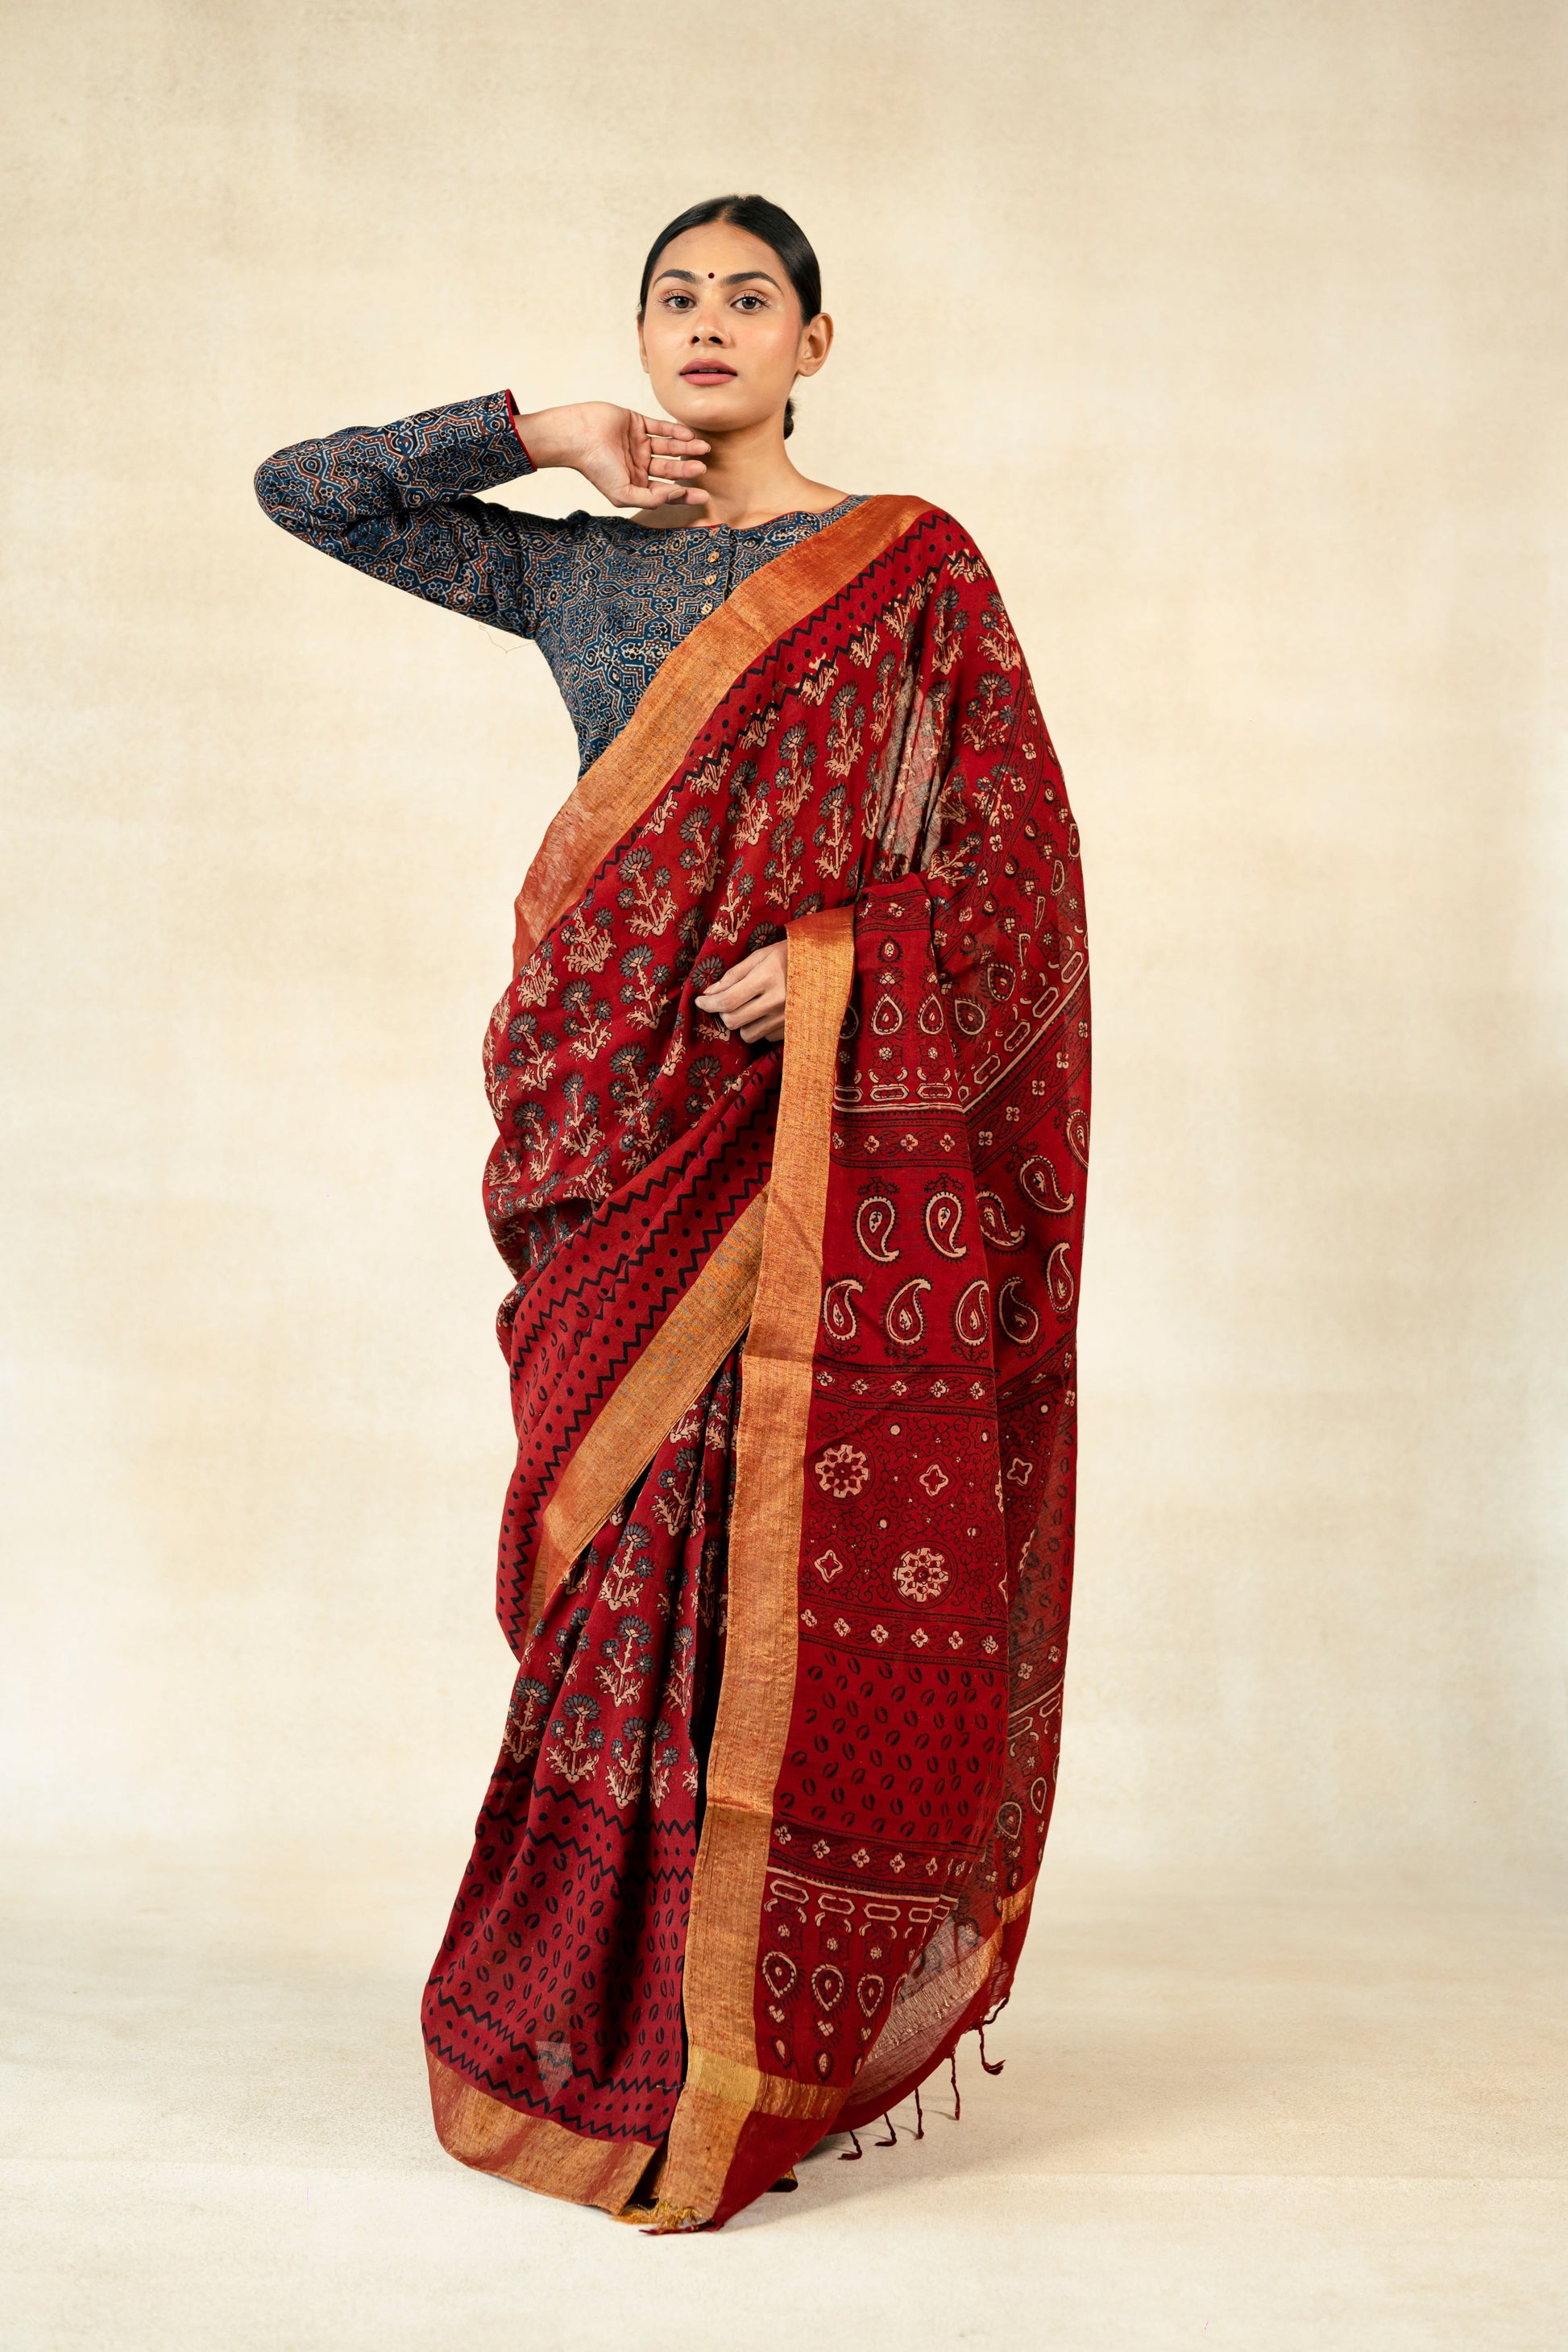 Madder red ajrakh prints linen saree, Ajrakh hand block print cotton linen saree in madder red color, Saree blouse